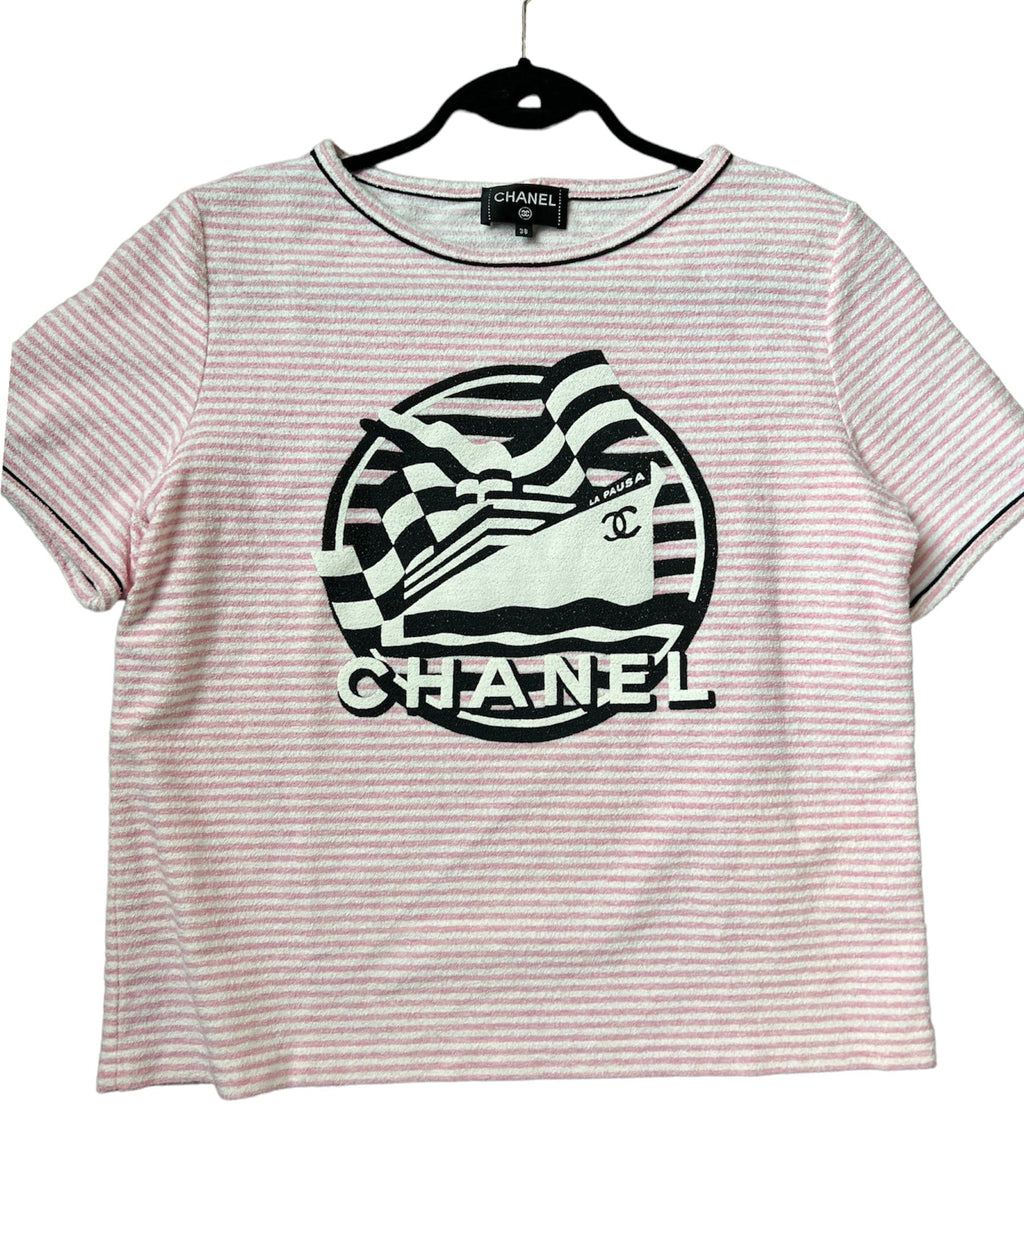 Chanel Striped White and Blue La Pausa 2019 T-Shirt